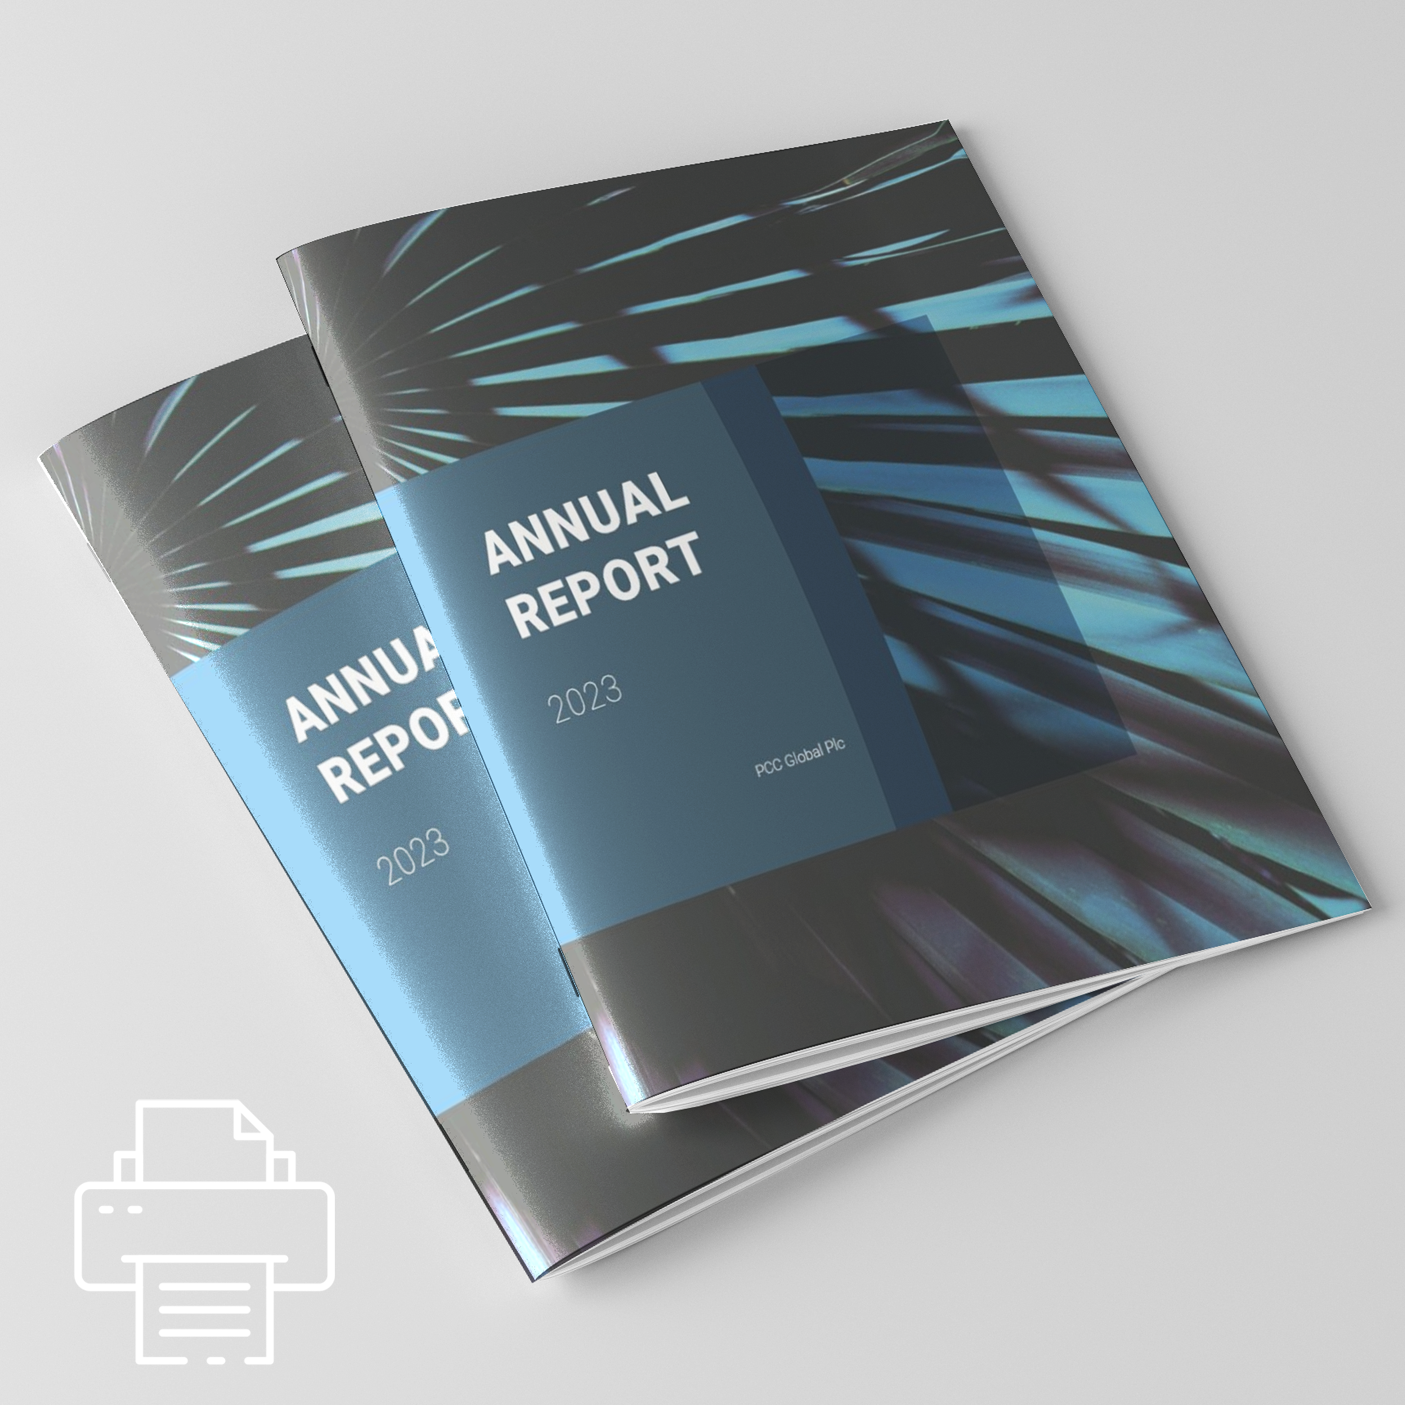 Annual report with printer symbol